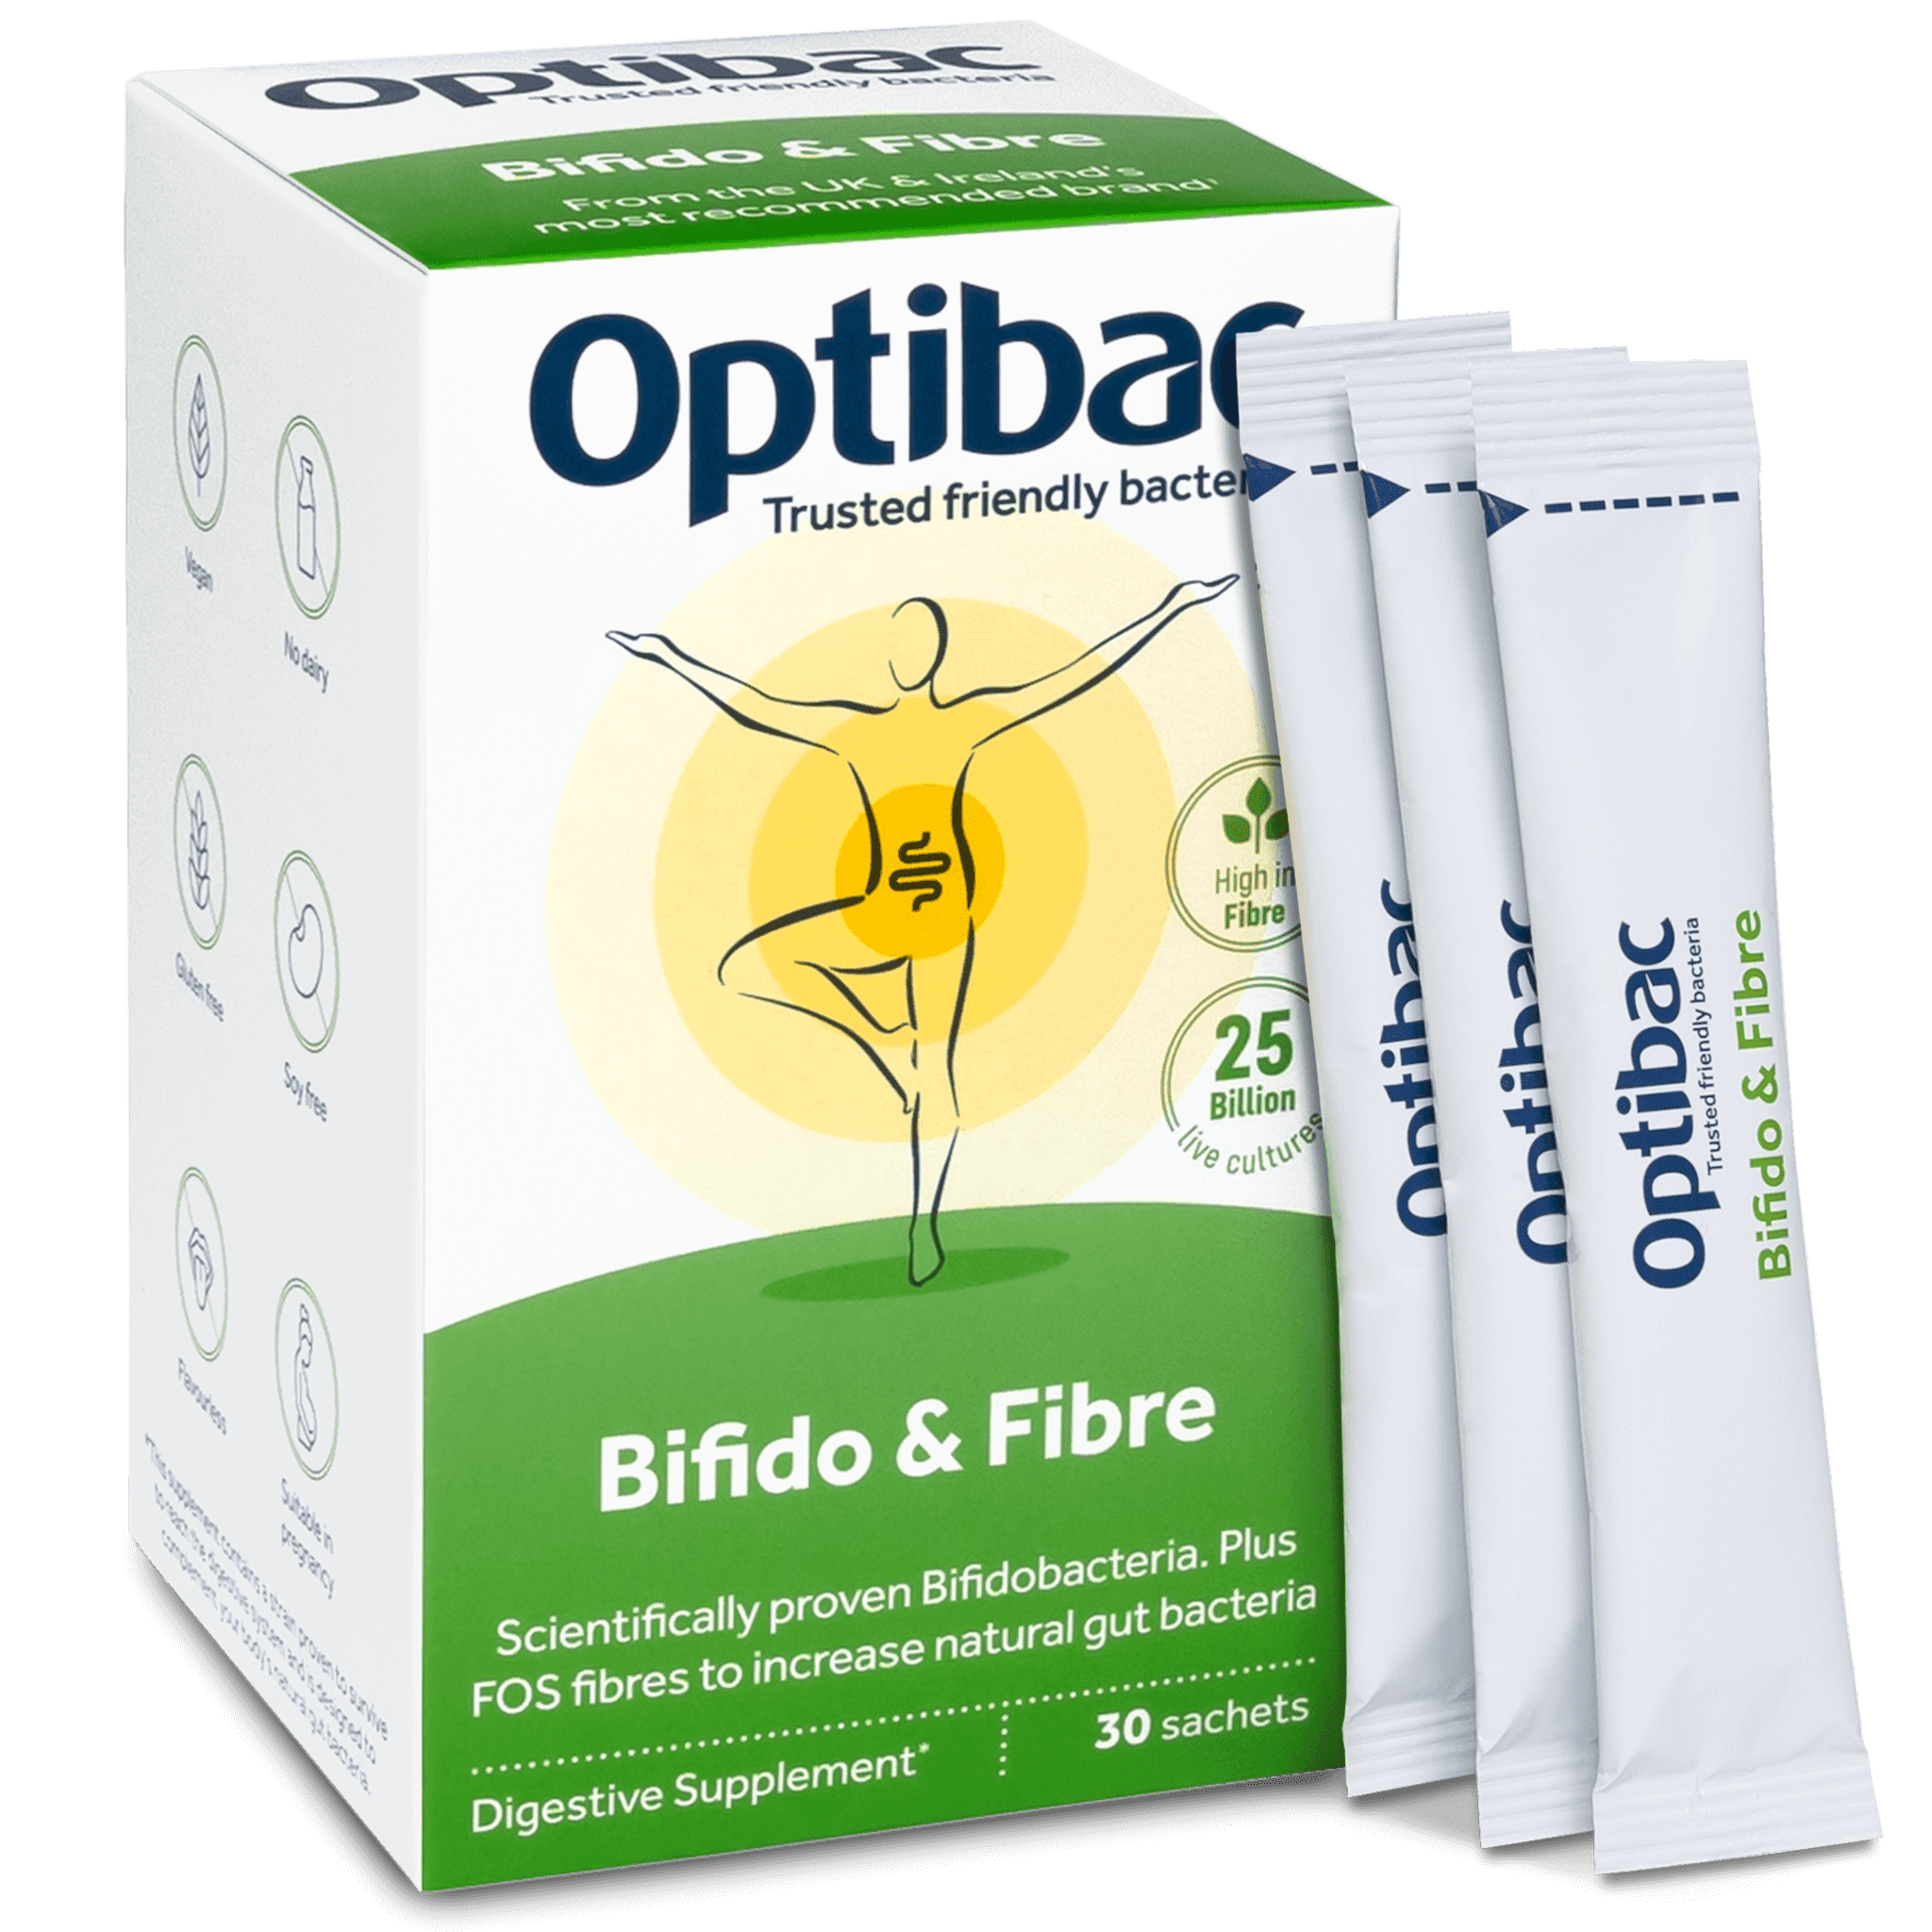 Optibac Probiotics Bifido & Fibre | probiotics for constipation | bifidobacterium probiotic with FOS prebiotic